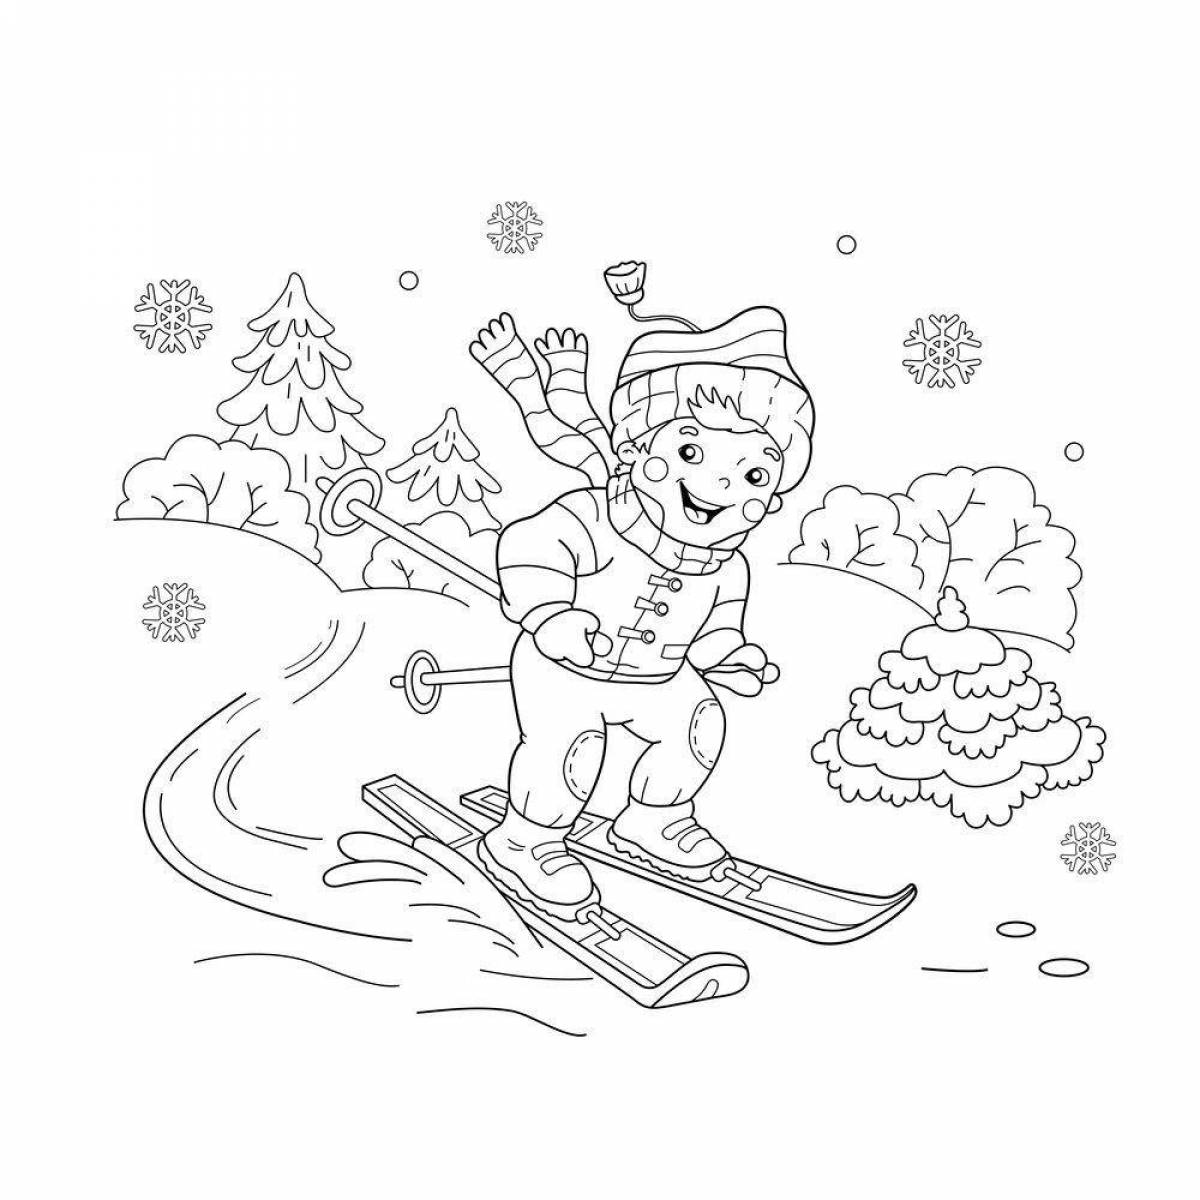 Playful ski coloring